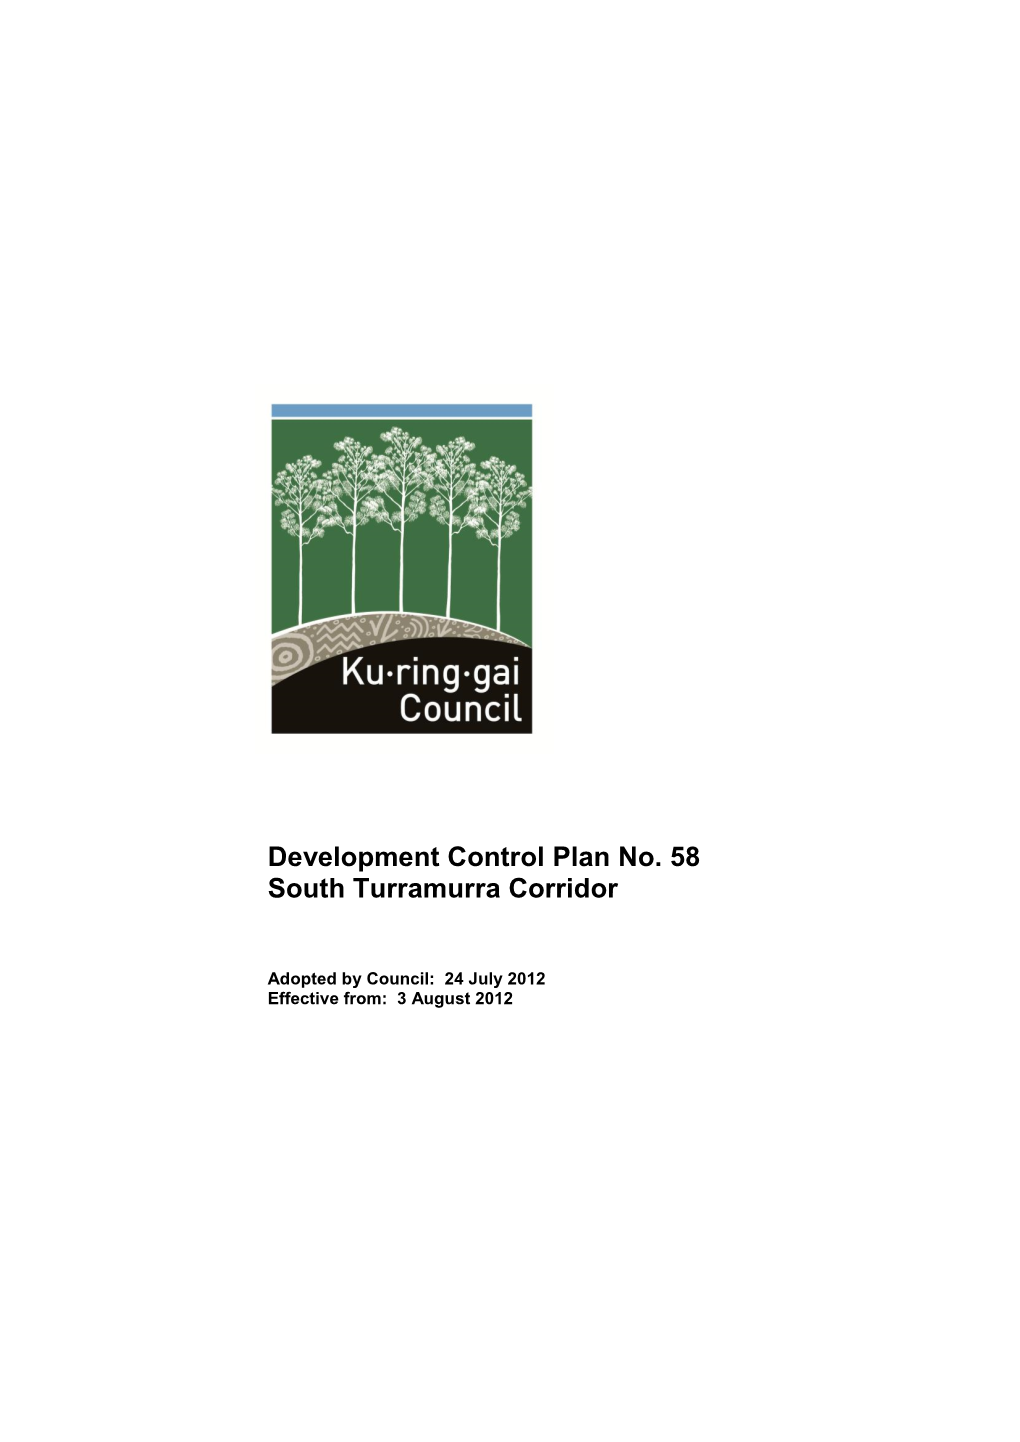 Development Control Plan No. 58 South Turramurra Corridor